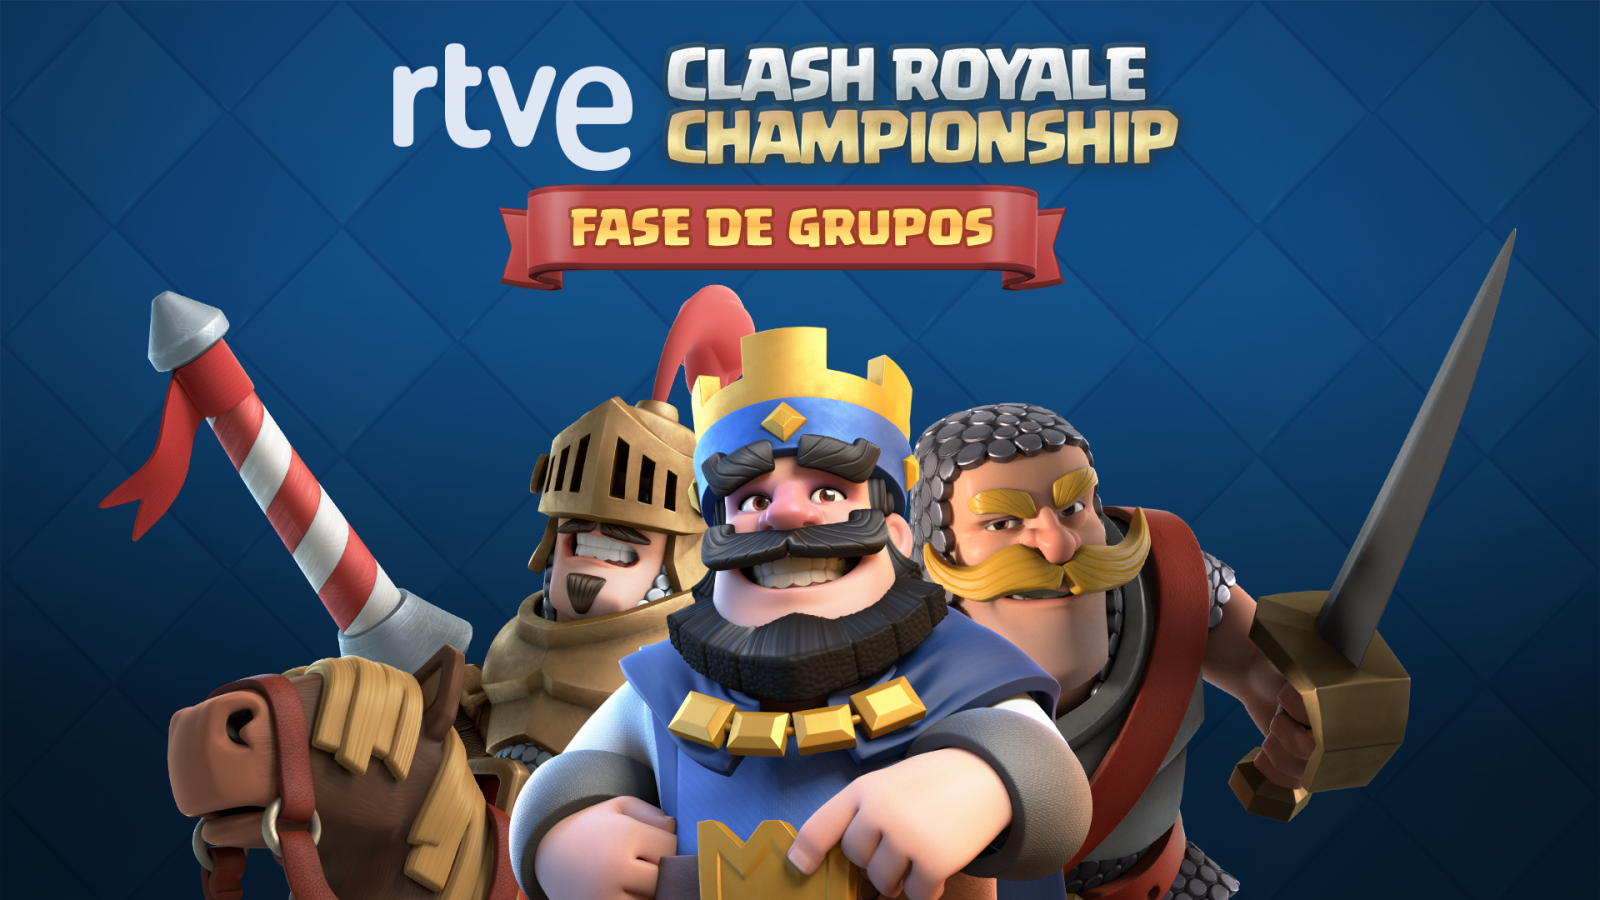 RTVE Clash Royale Championship - Fase de grupos